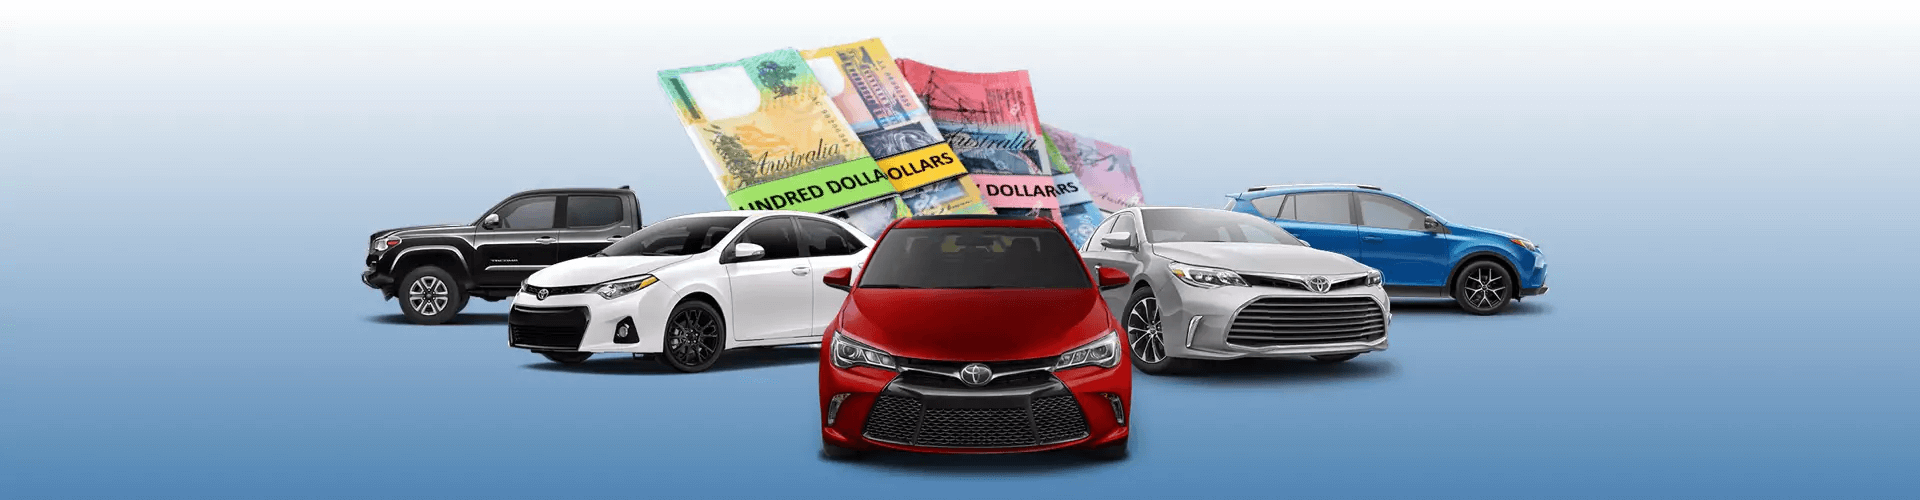 narrabri cash for cars